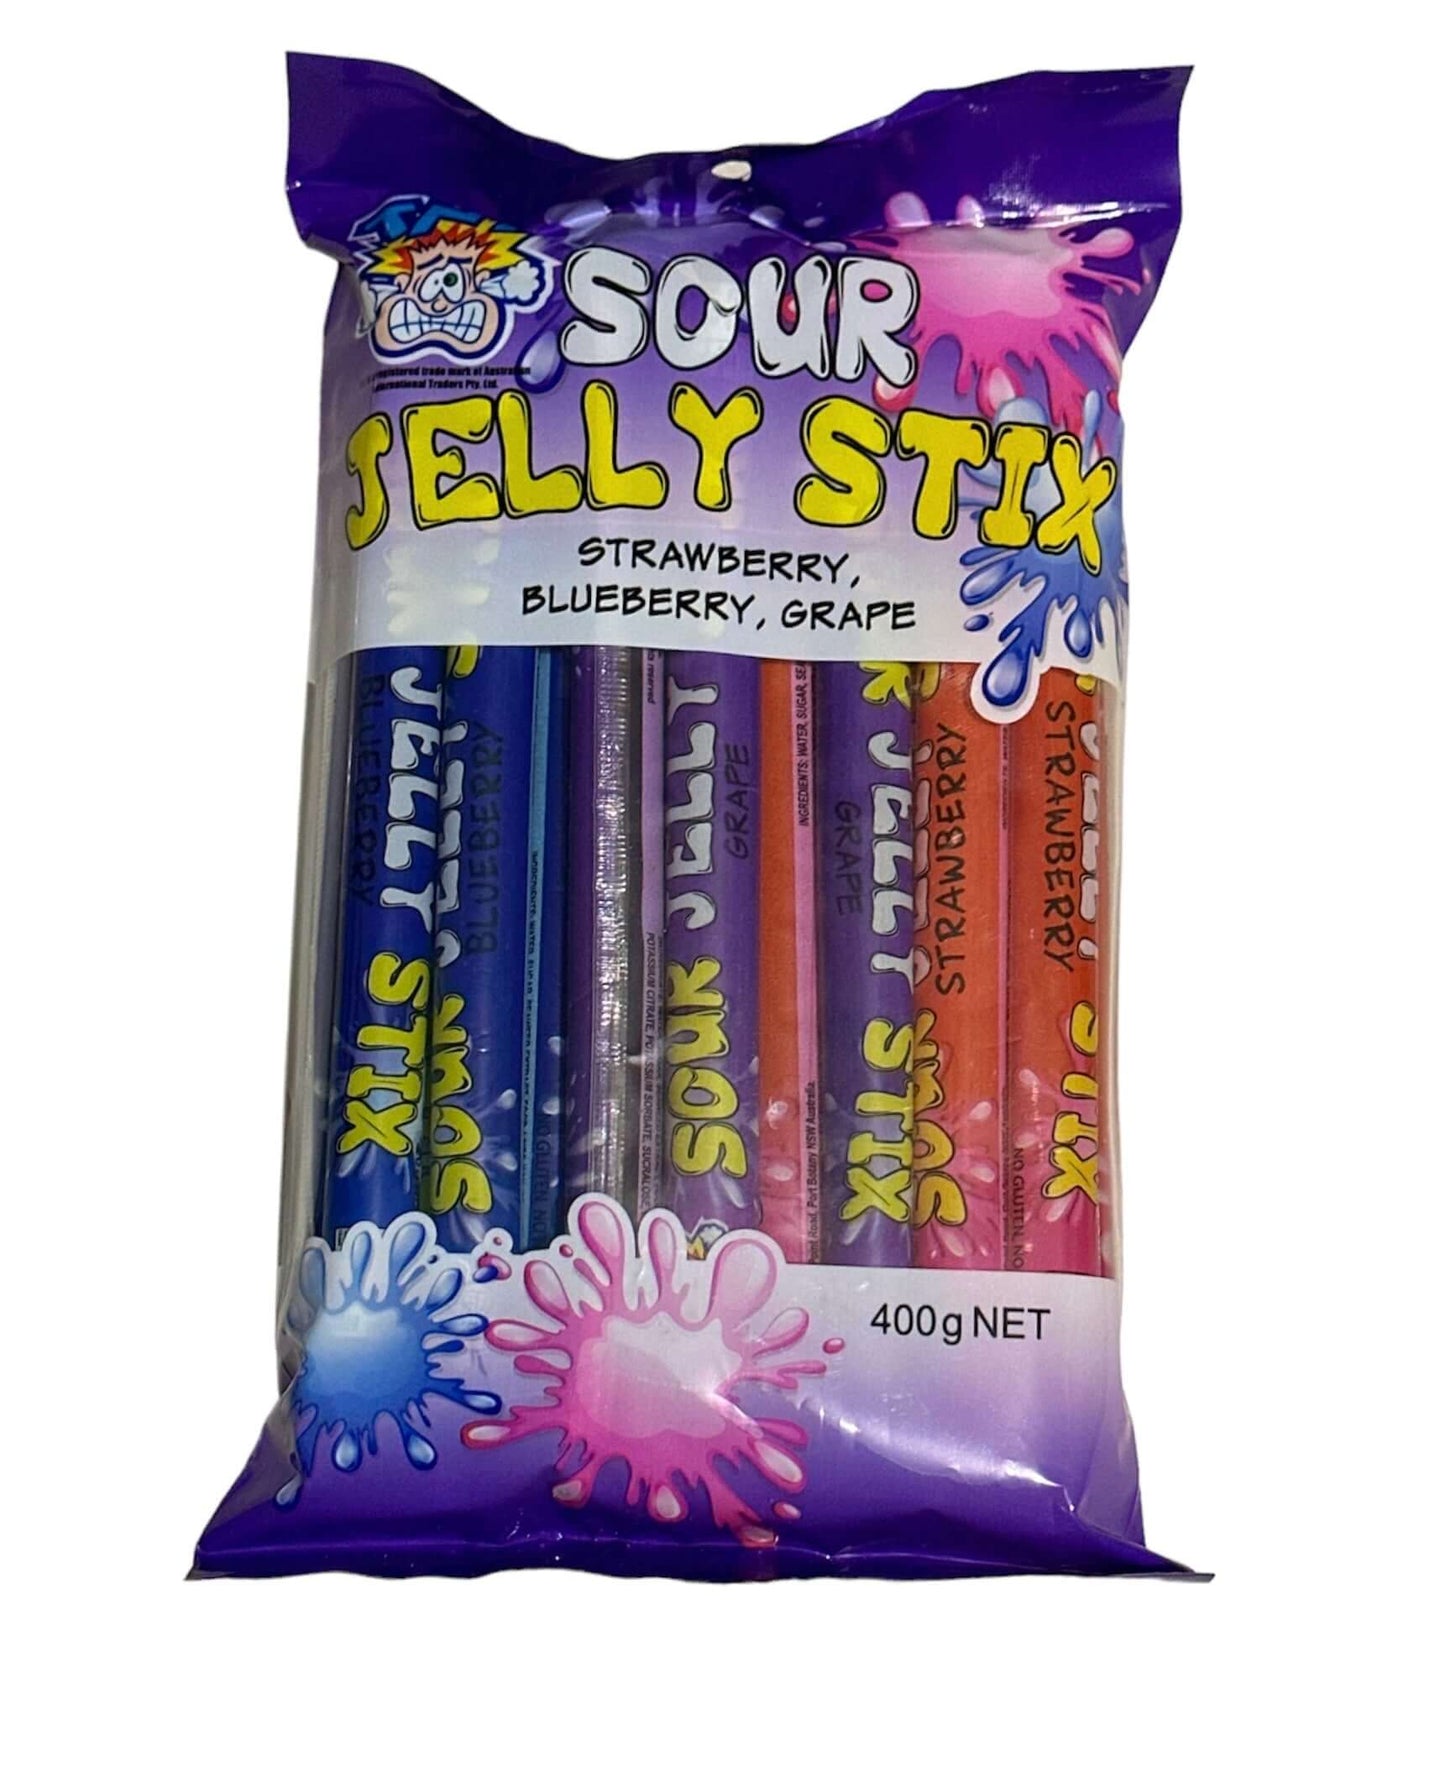 TNT Sour Jelly Stix 20 Pack Strawberry Blueberry Grape